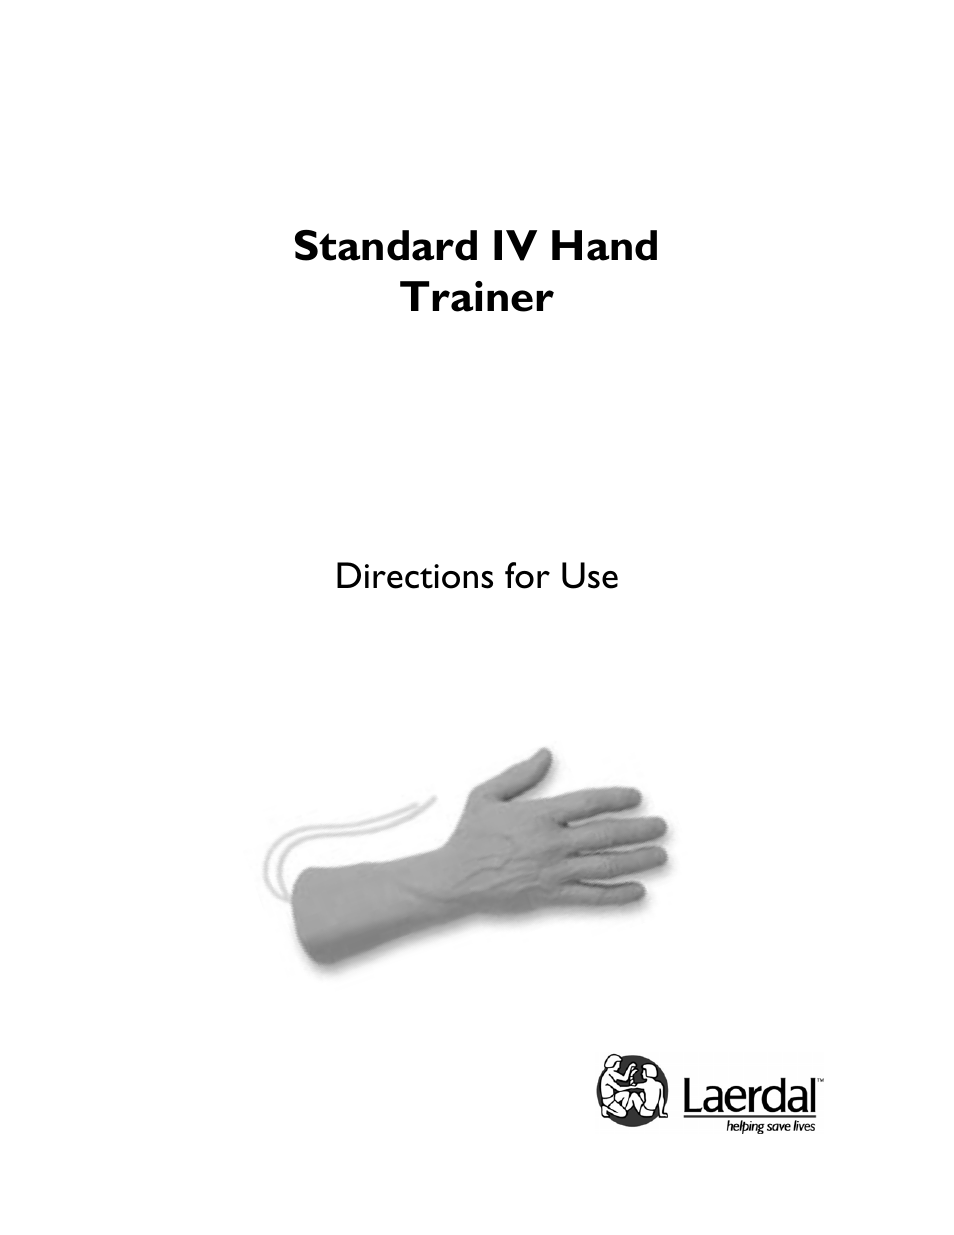 Standard IV Hand Trainer